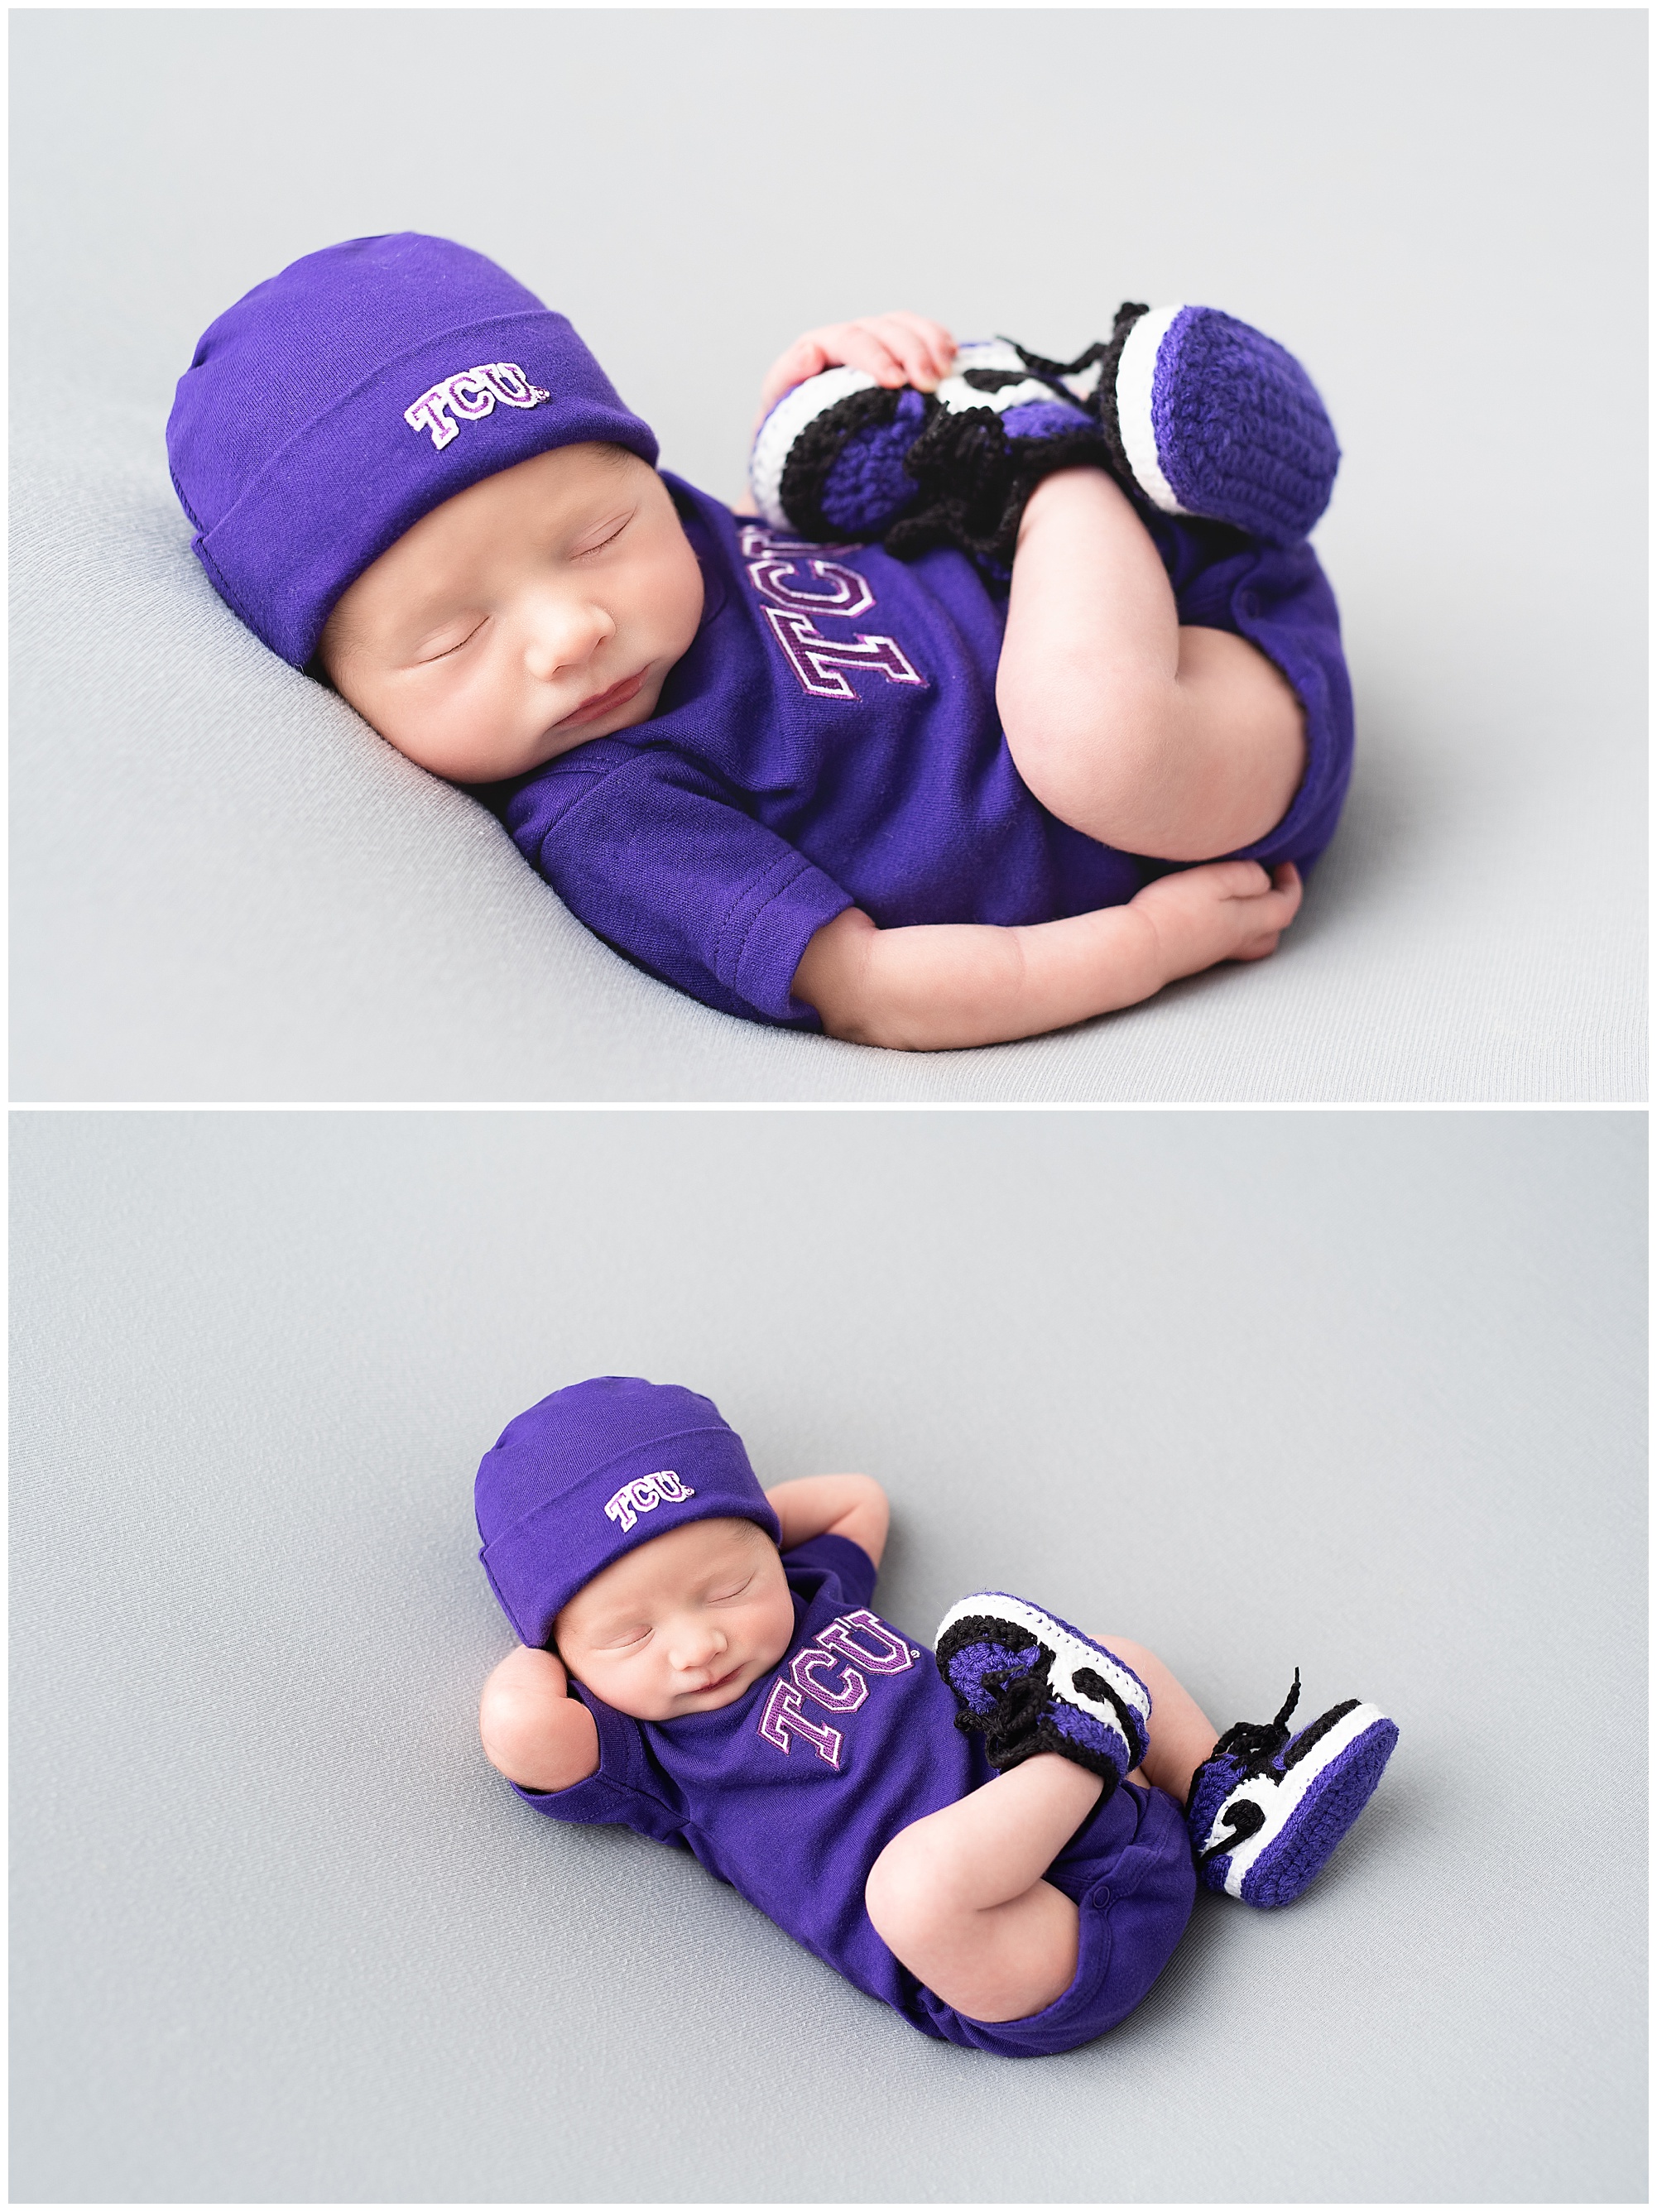 newborn baby boy in his TCU outfit at his studio newborn photo shoot